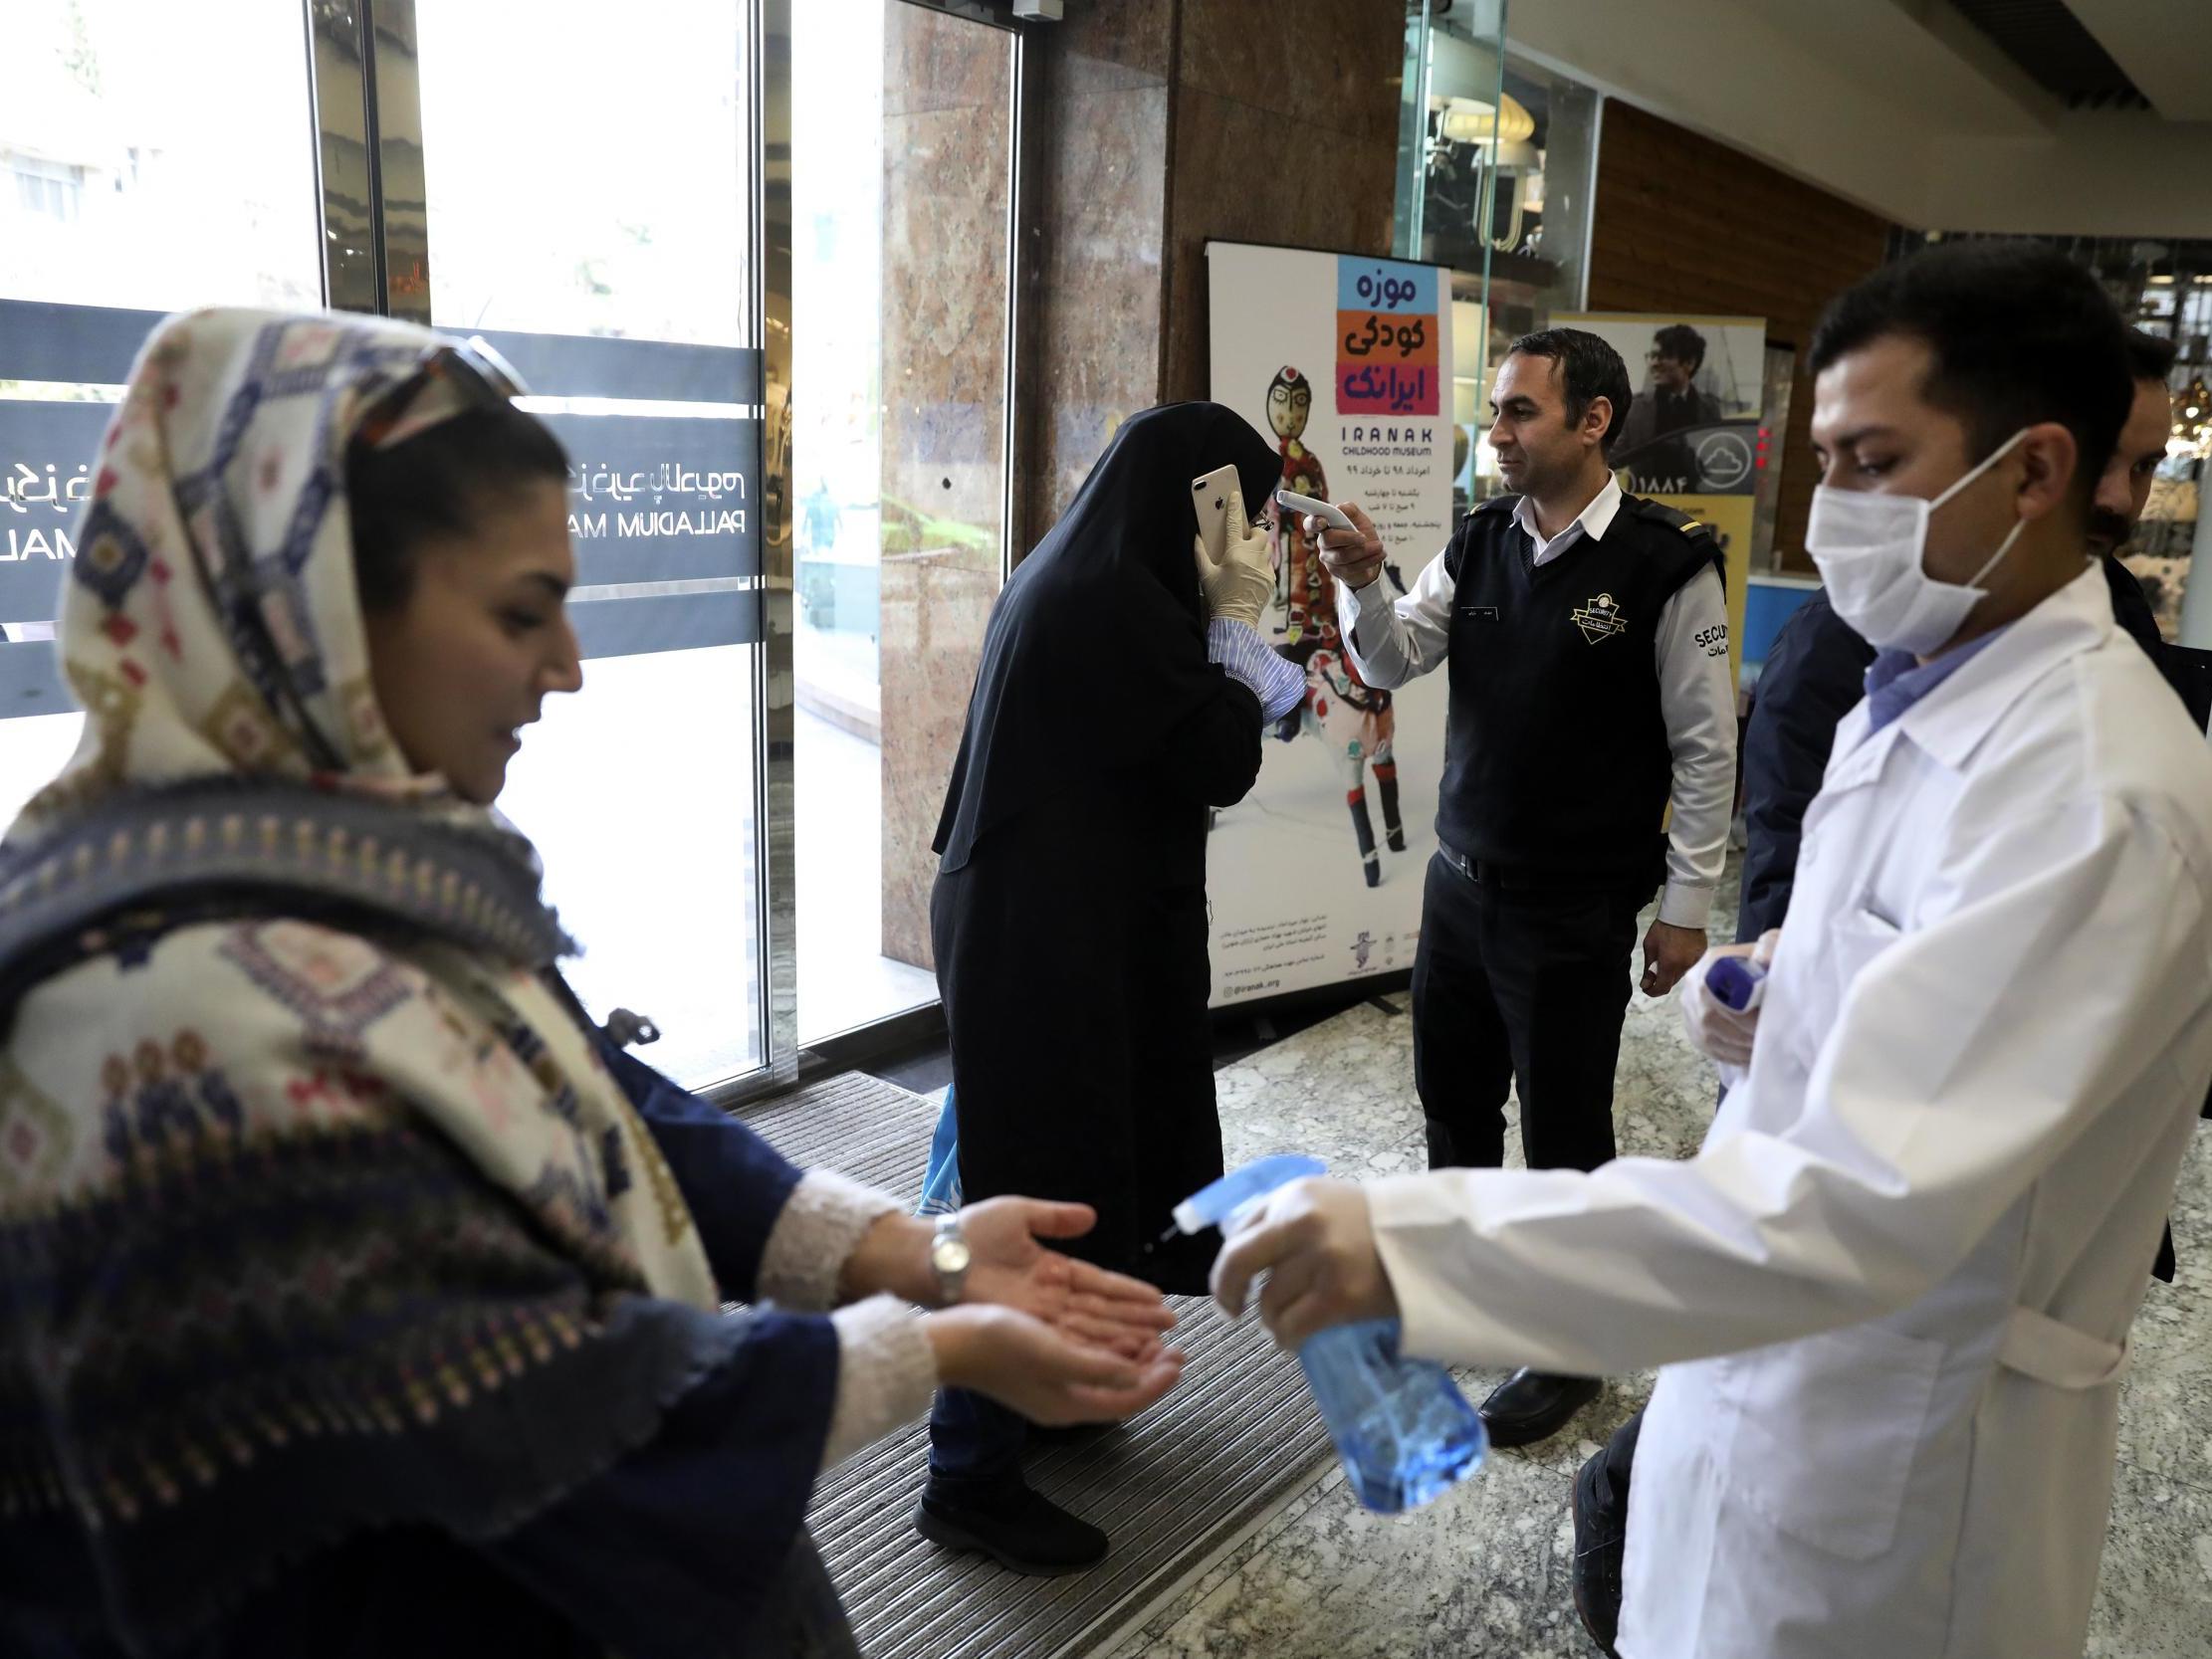 Iran has tightened controls on the media since the coronavirus outbreak